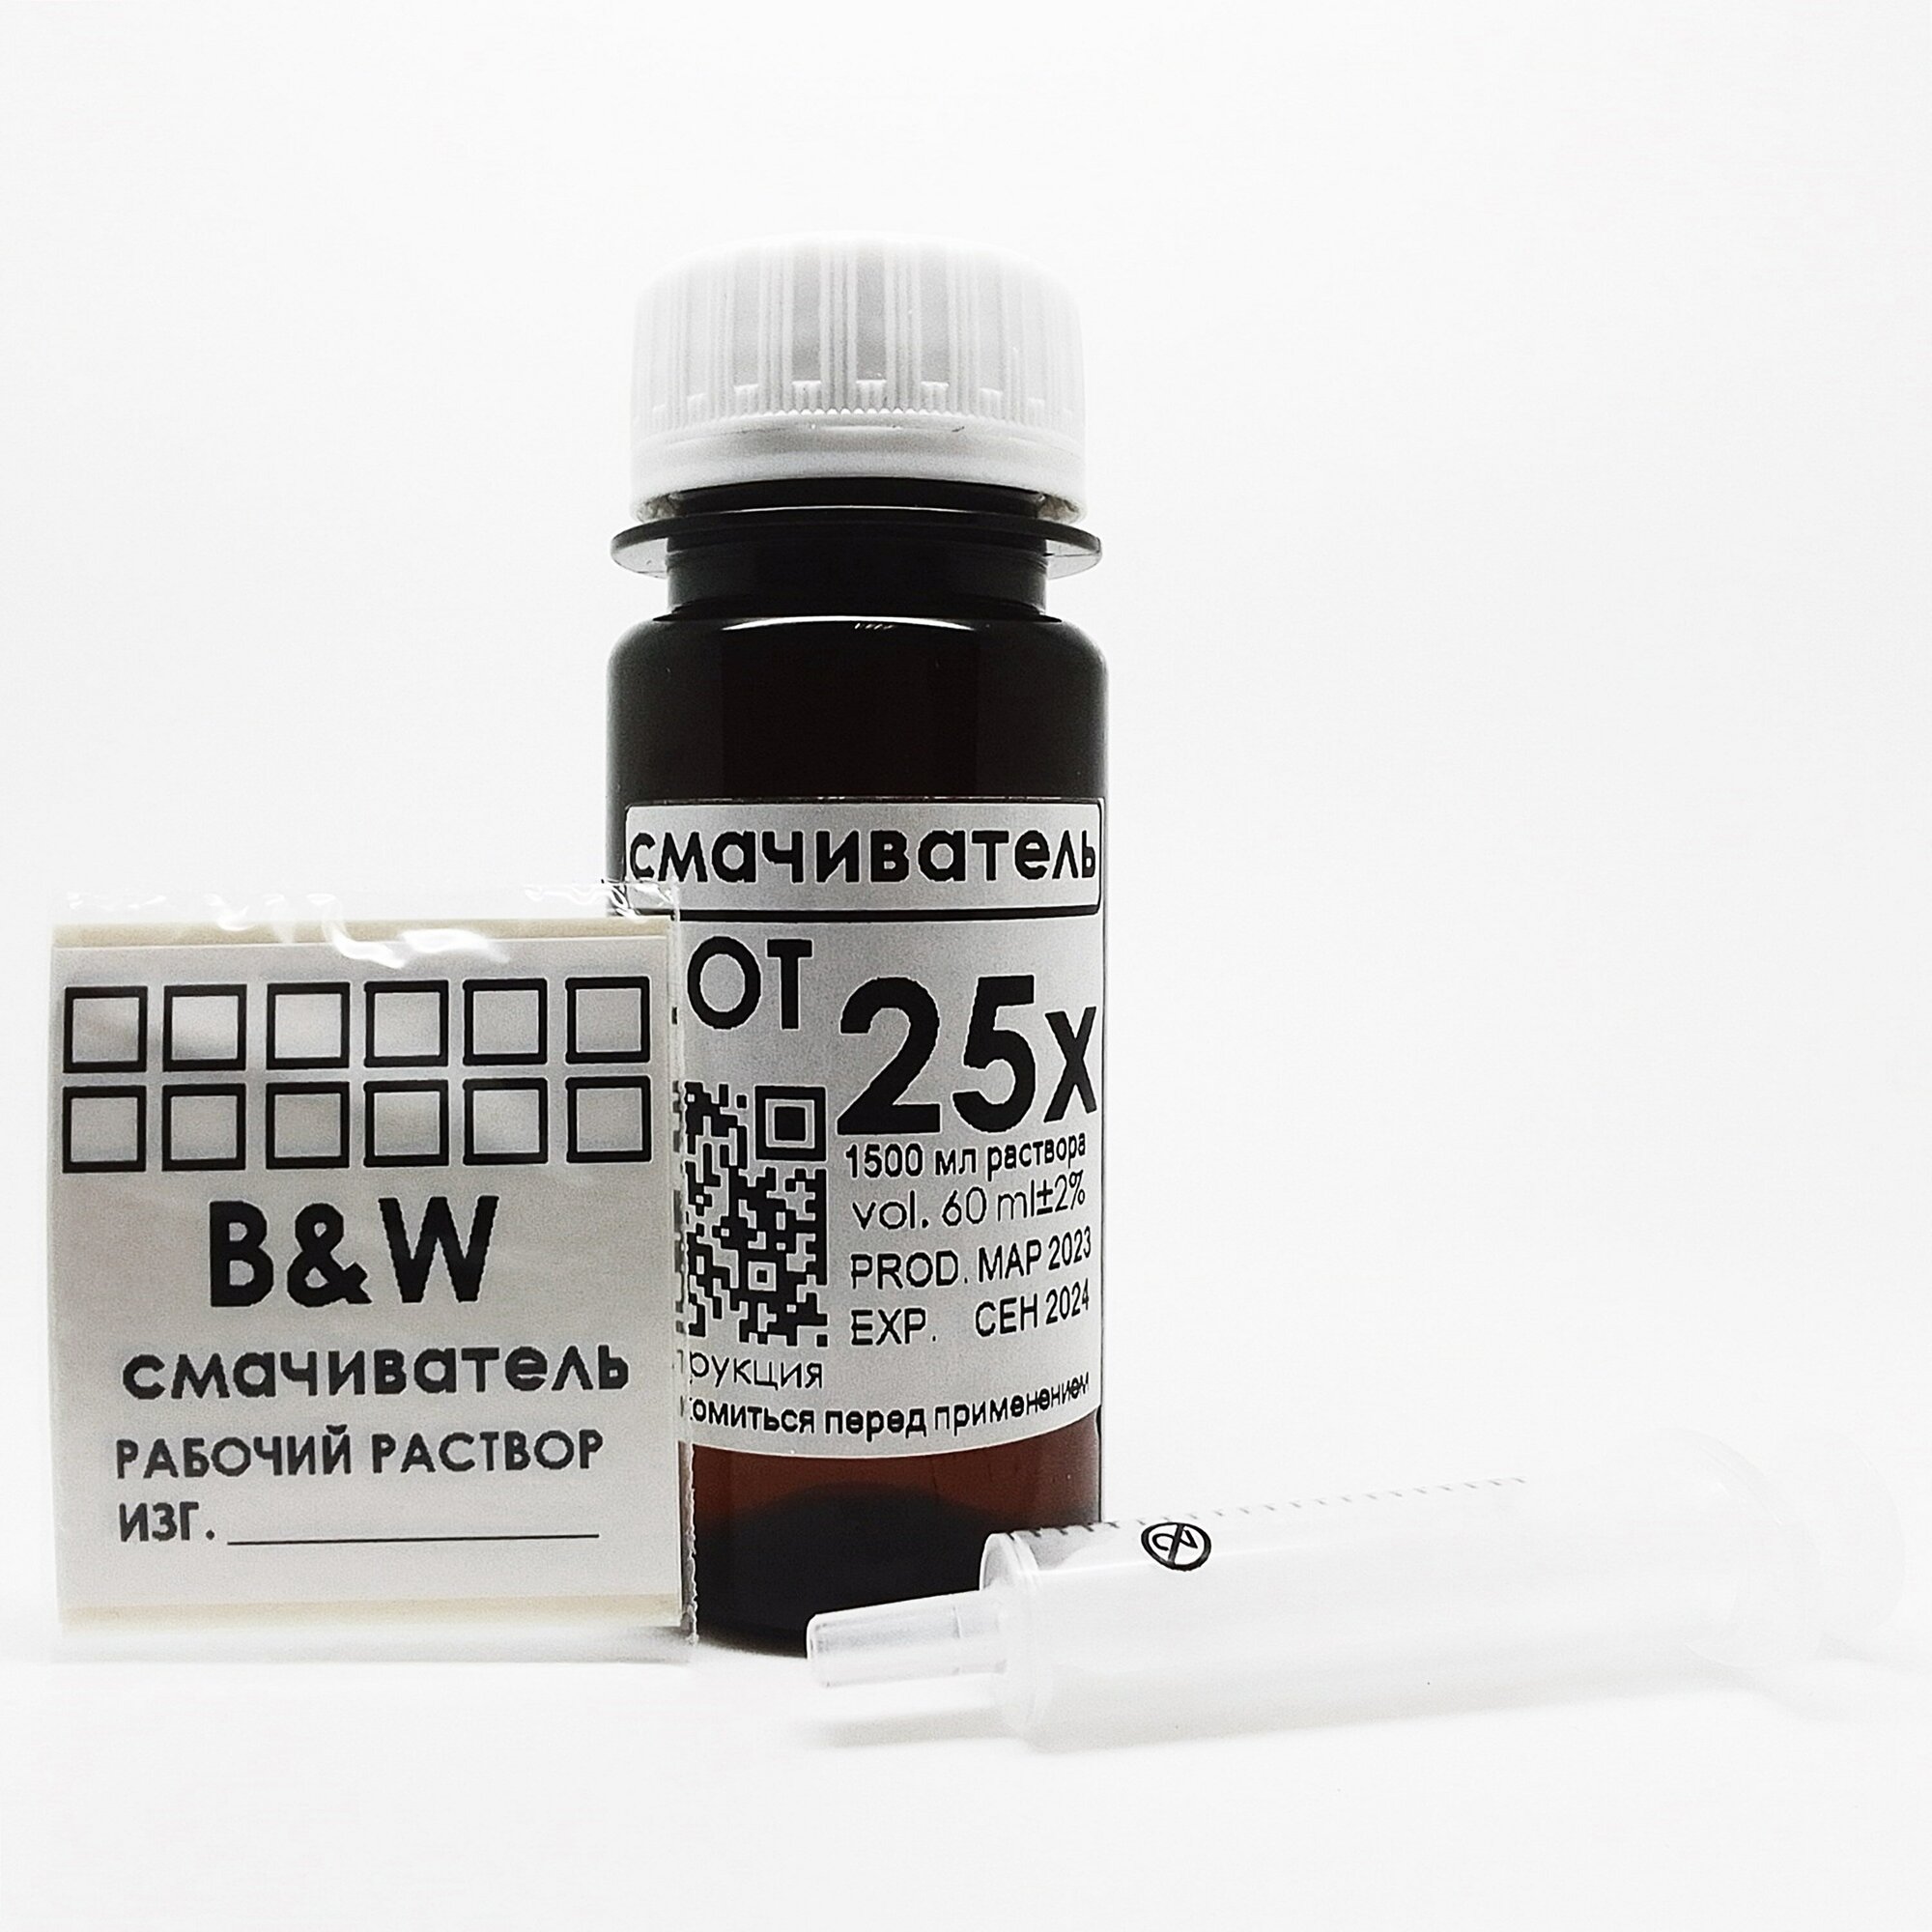 Набор химии для проявки черно-белых фотопленок и бумаг B&W